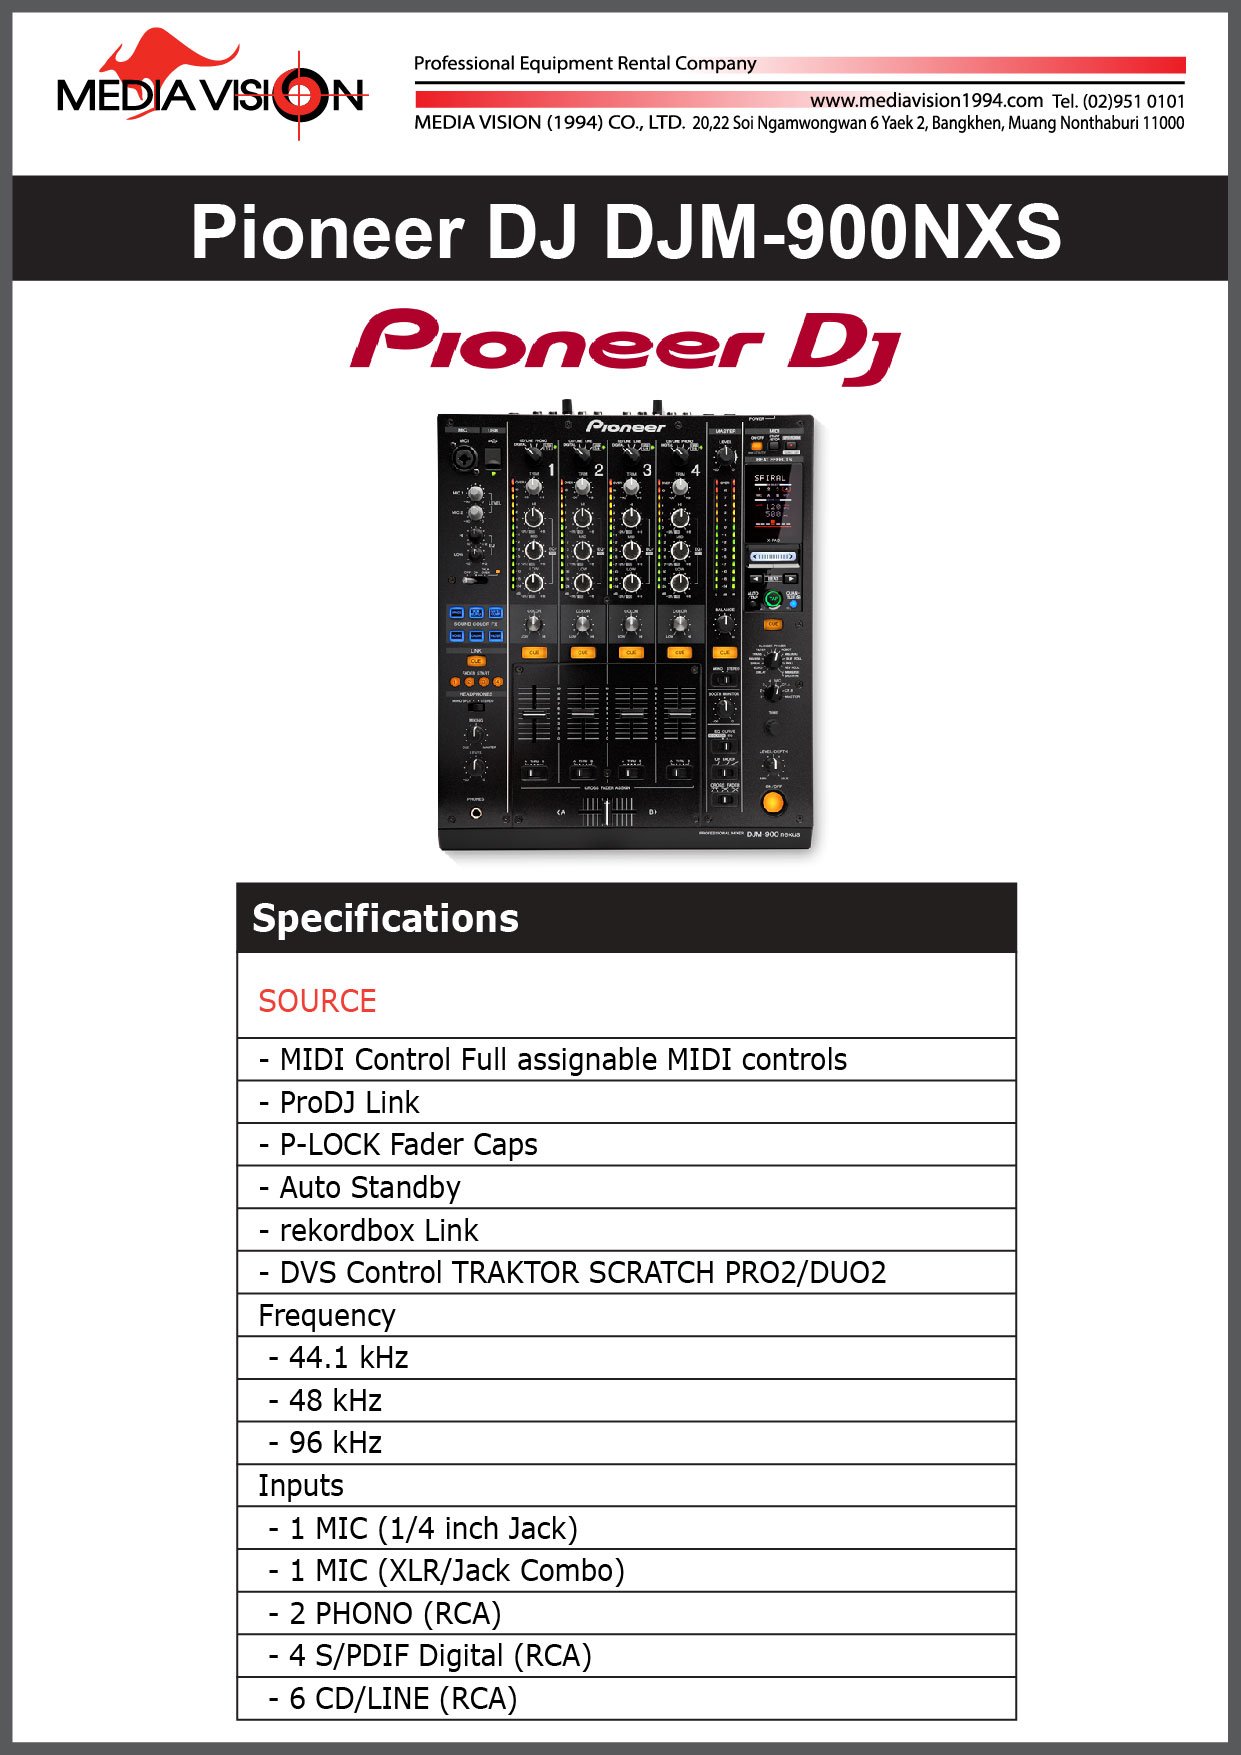 PIONEER DJ DJM-900NXS